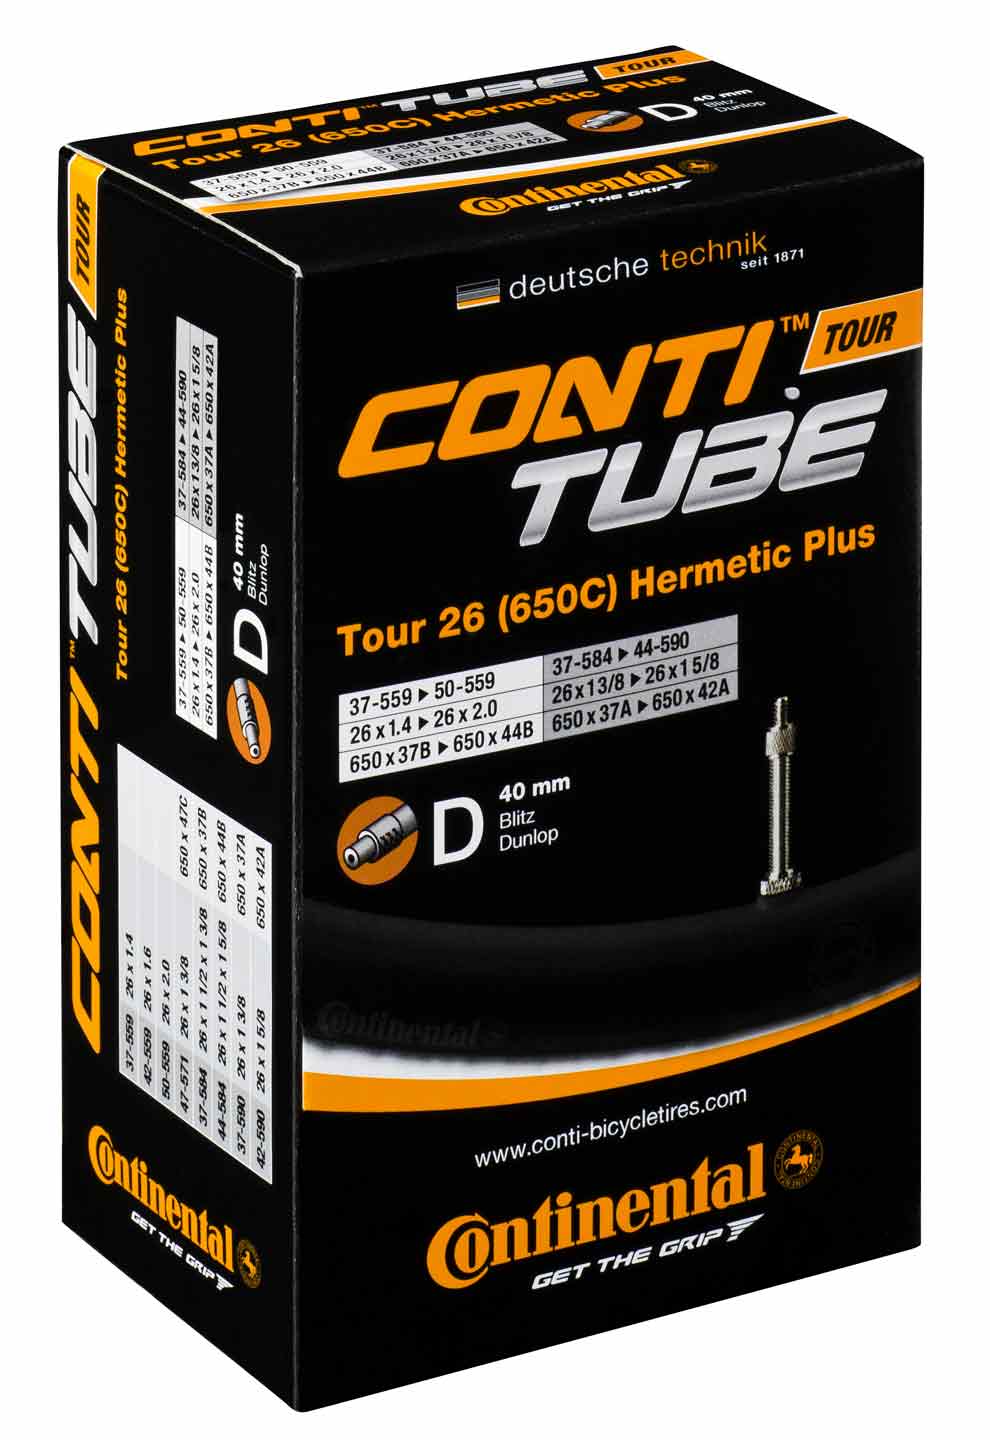 Continental Tour Tube Wide Hermetic Plus 26 - Bild 1